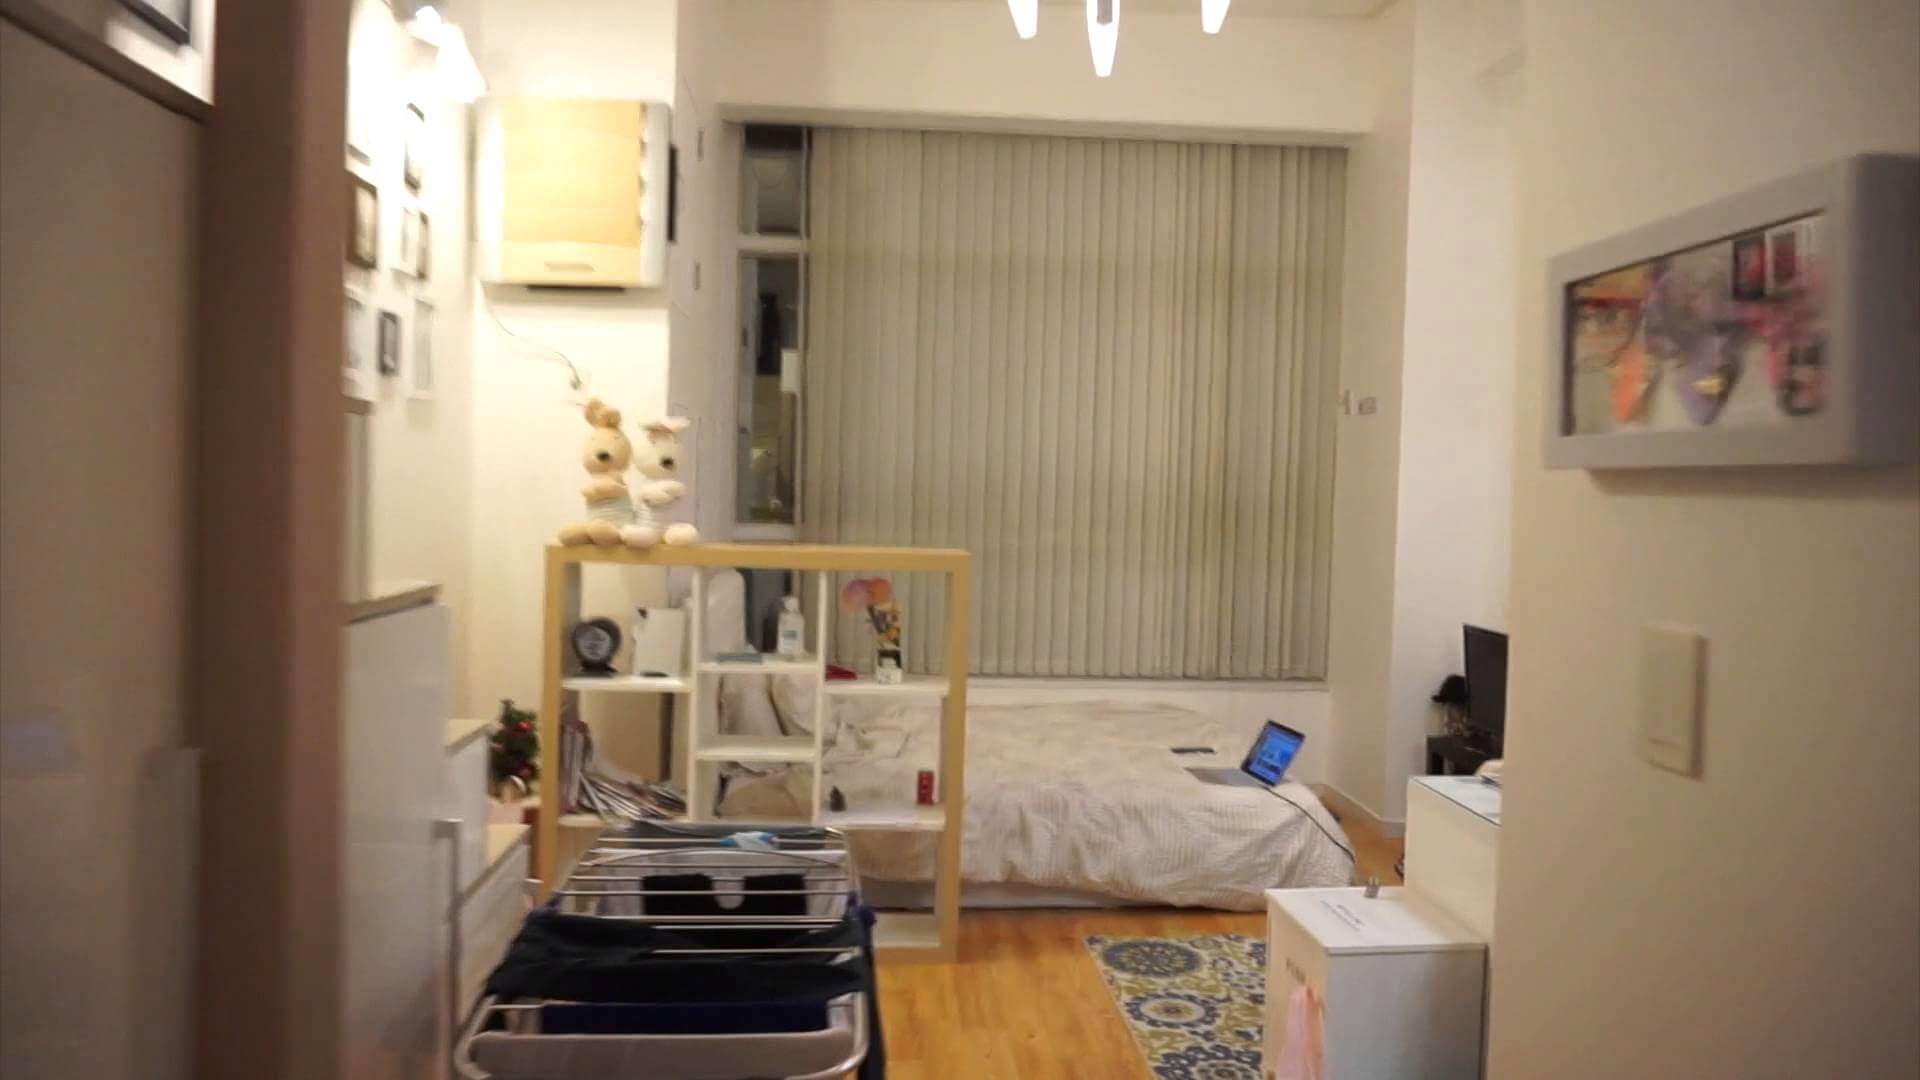 An officetel-type apartment in Korea